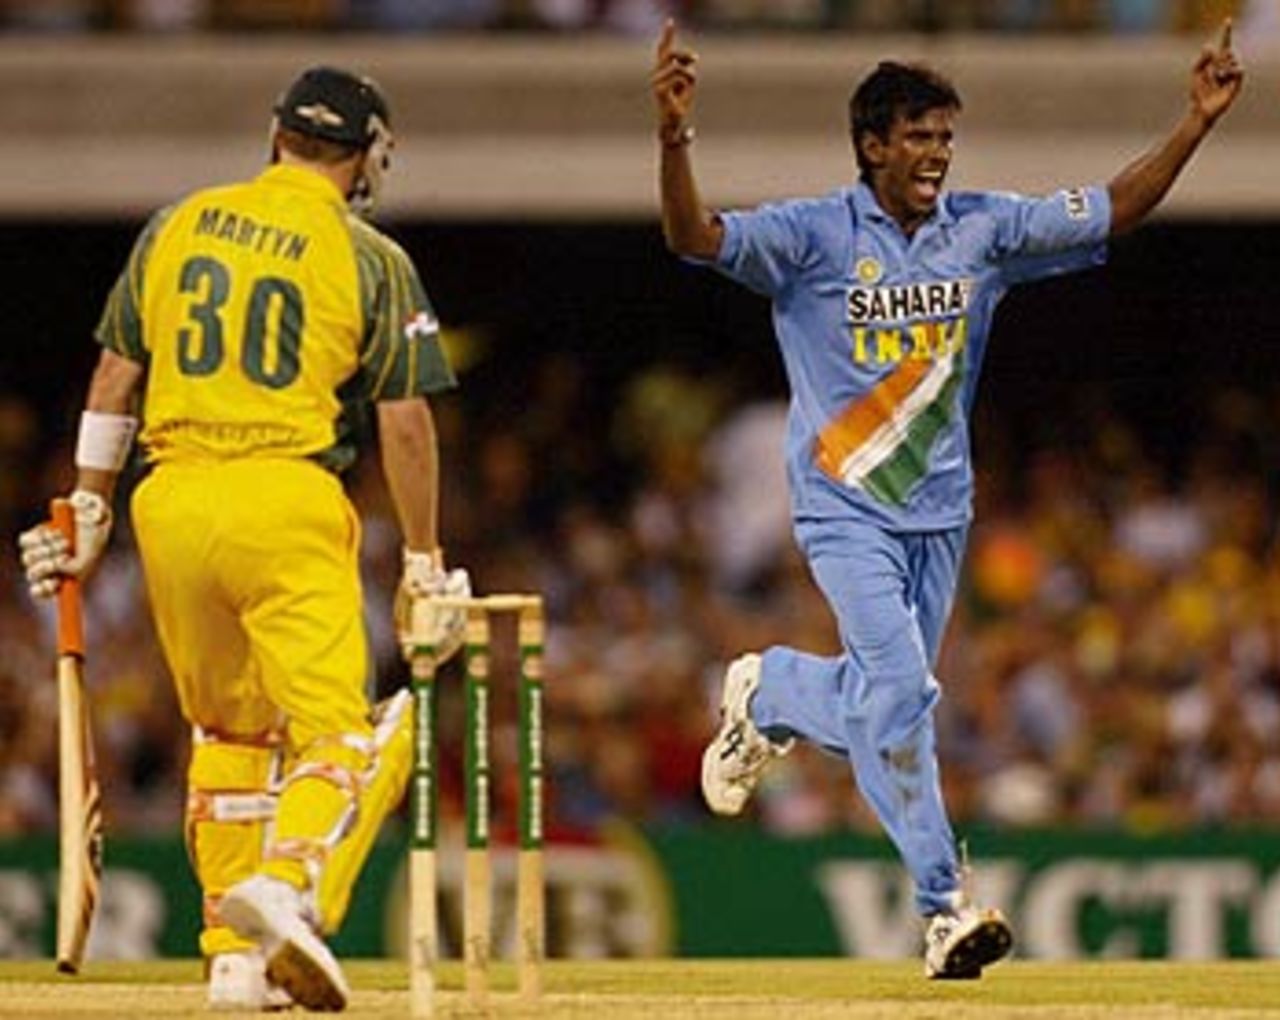 L Balaji gets rid of Damien Martyn on his way to a four-wicket haul, Australia v India, VB Series, Brisbane, 5th ODI, January 18, 2004